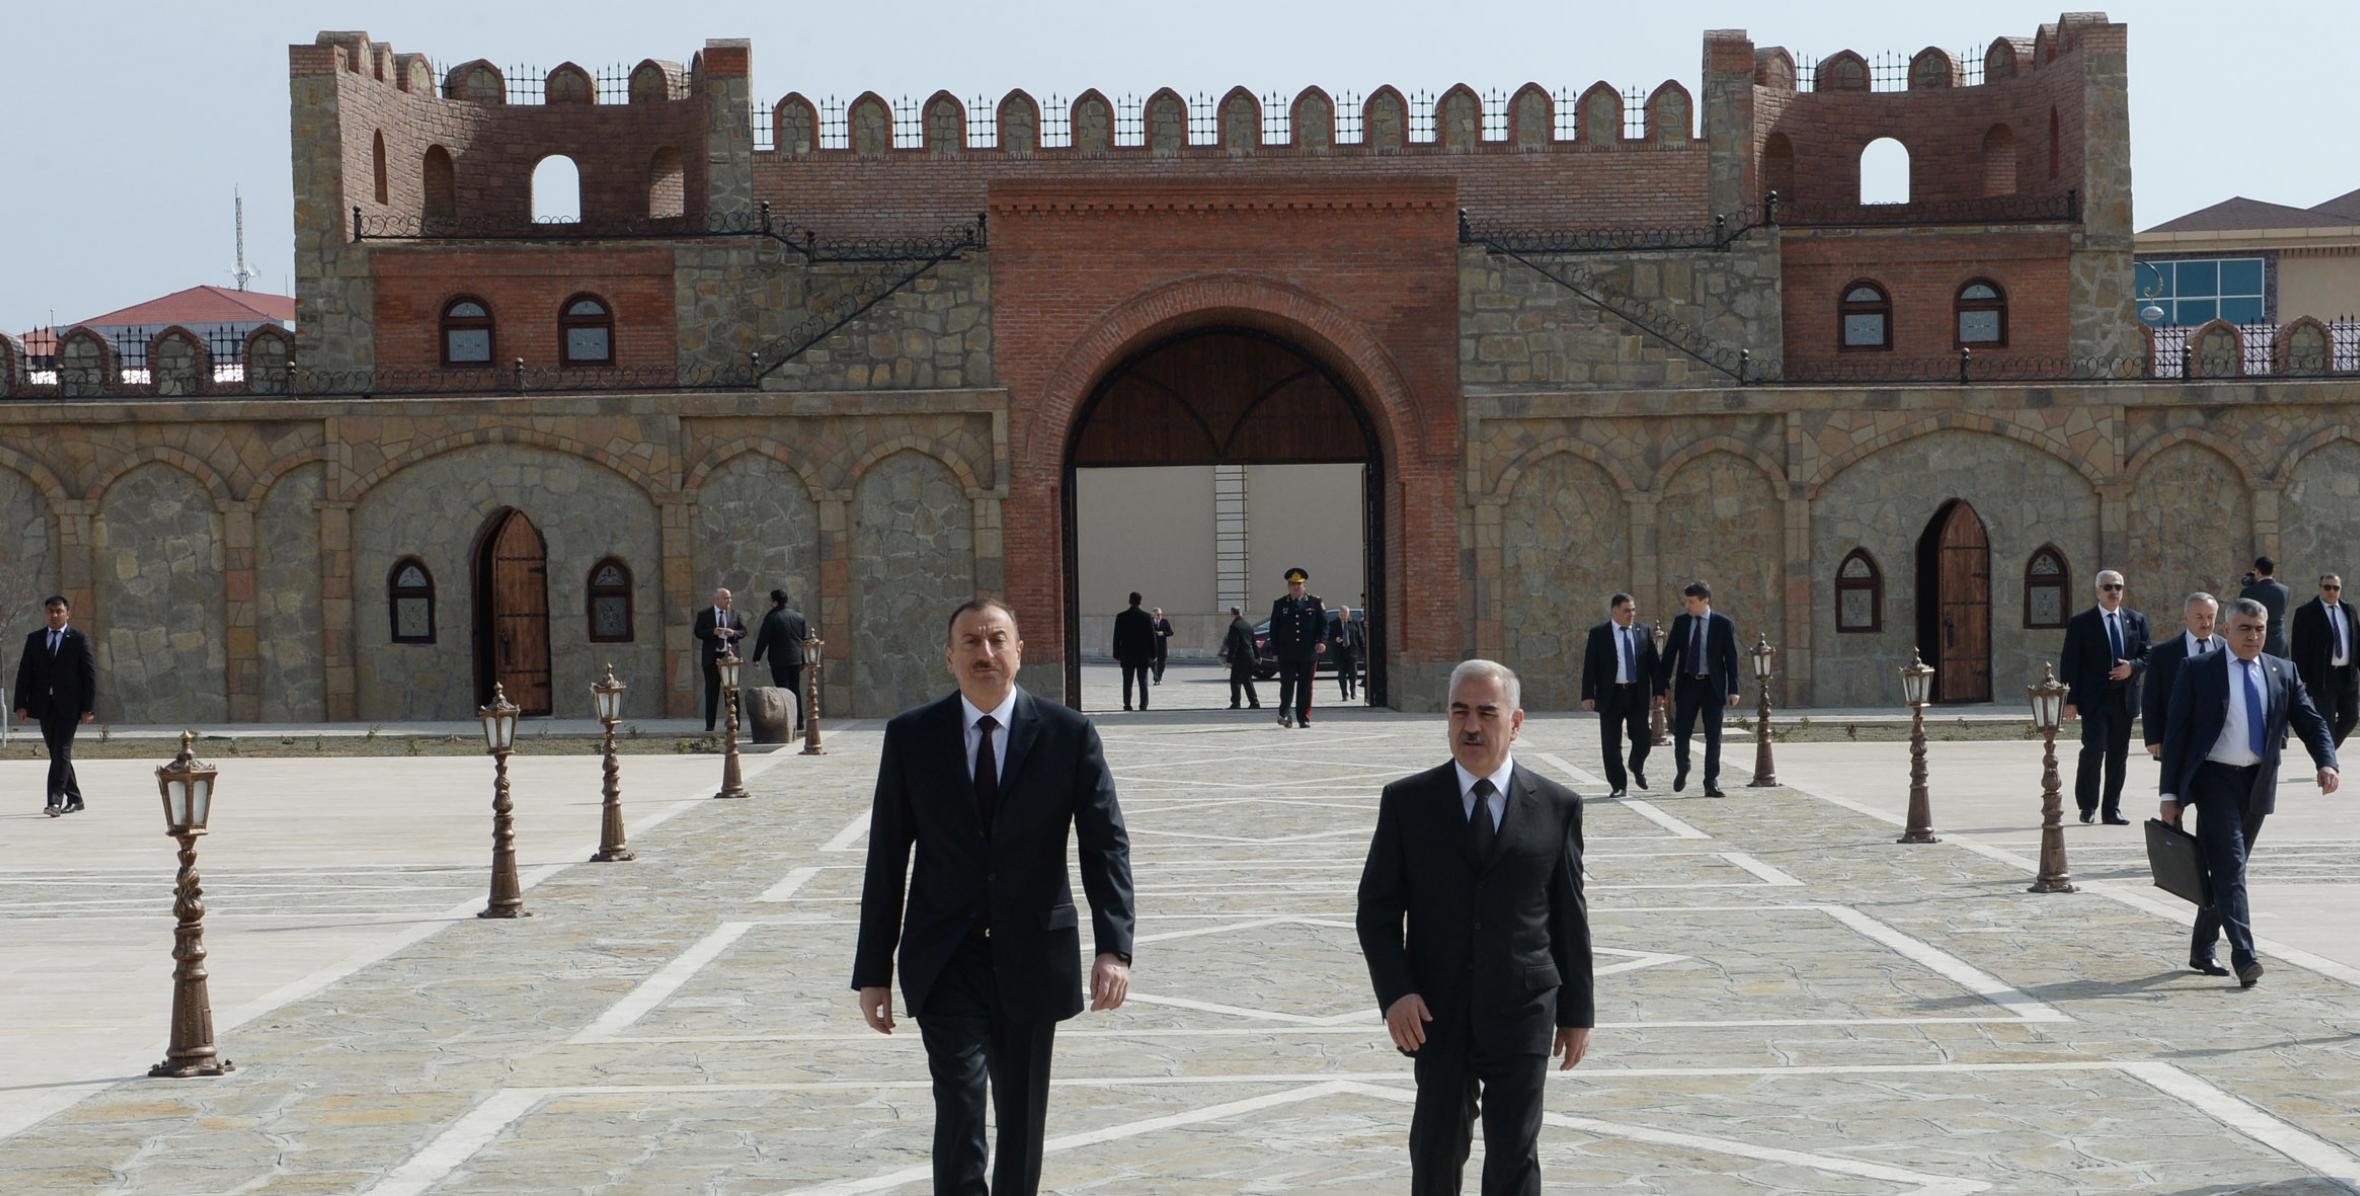 Visit of Ilham Aliyev to the Nakhchivan Autonomous Republic